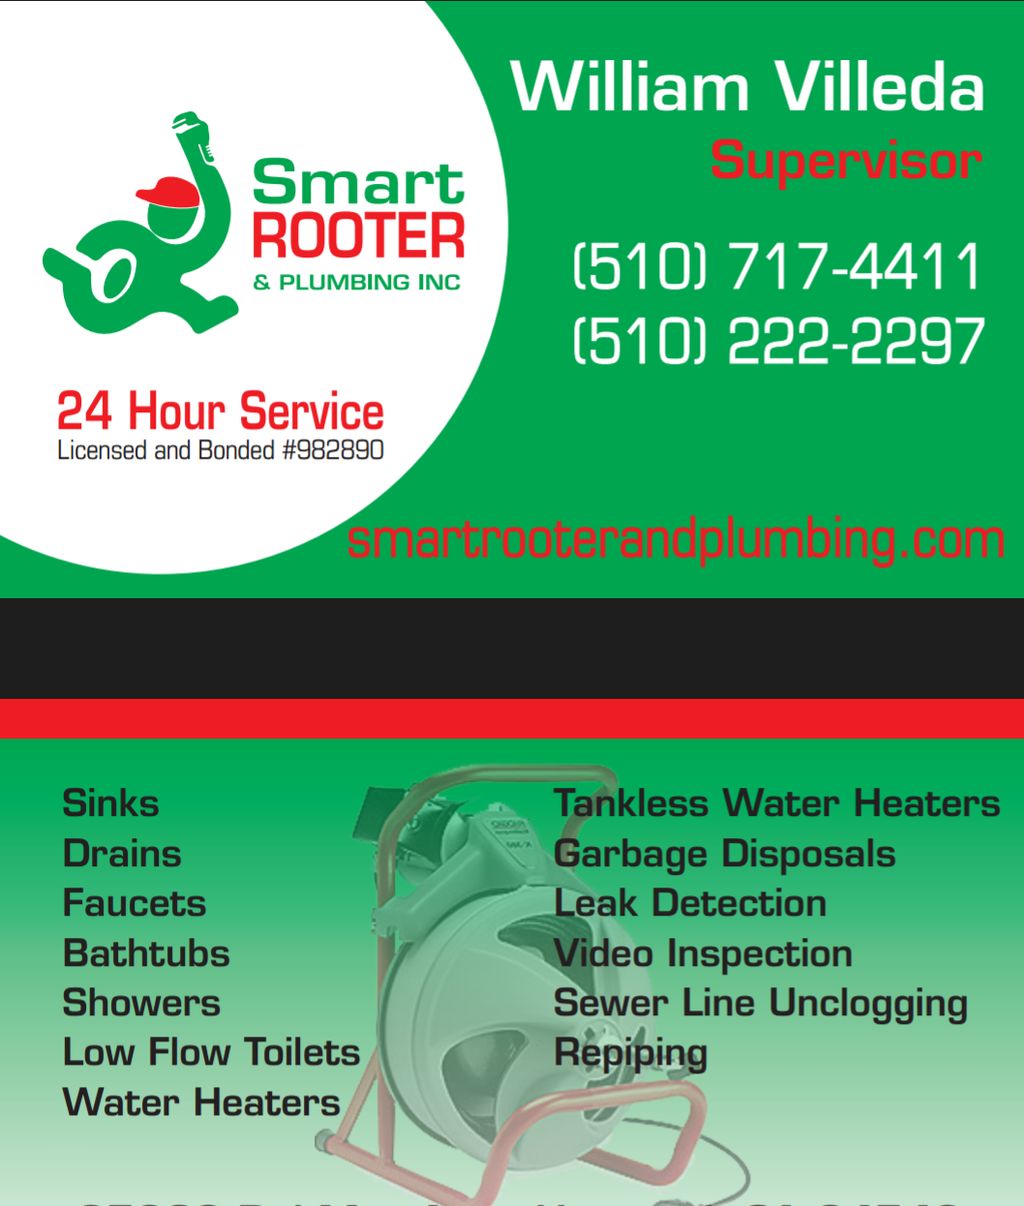 Smart rooter & plumbing inc